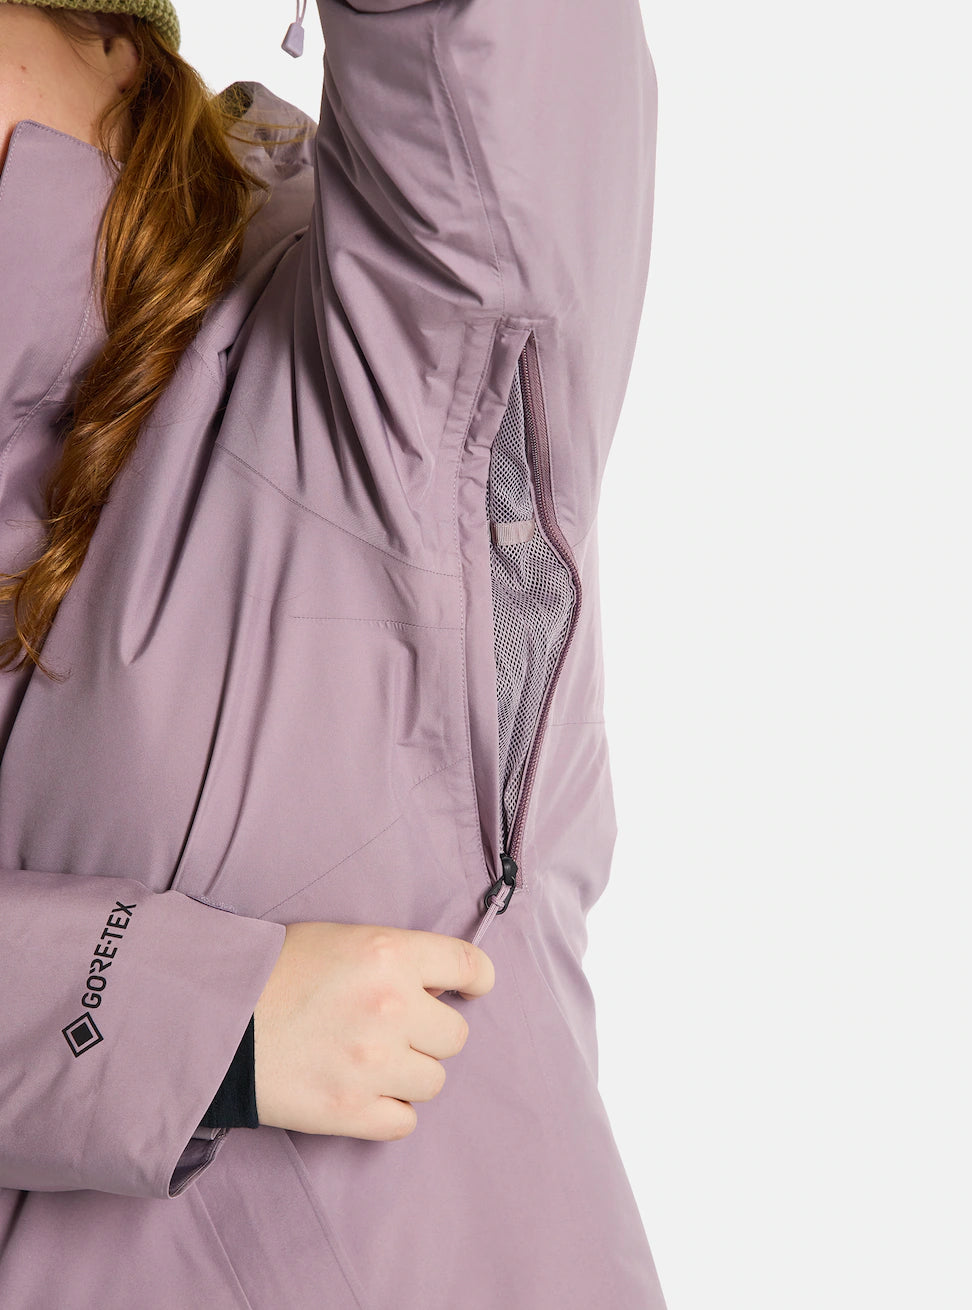 Powline GORE‑TEX 2L Insulated Jacket